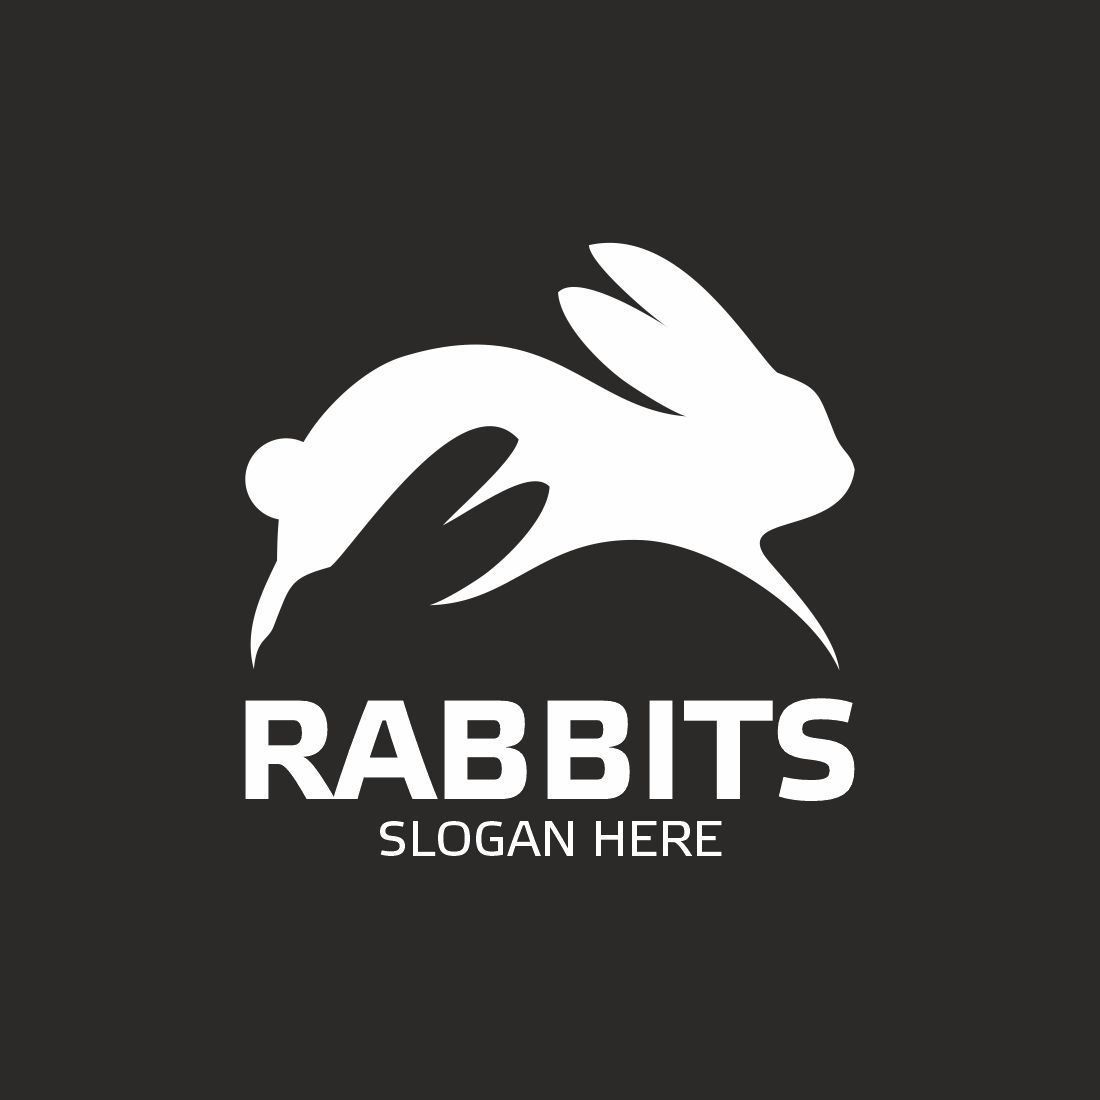 Rabbits logo preview image.